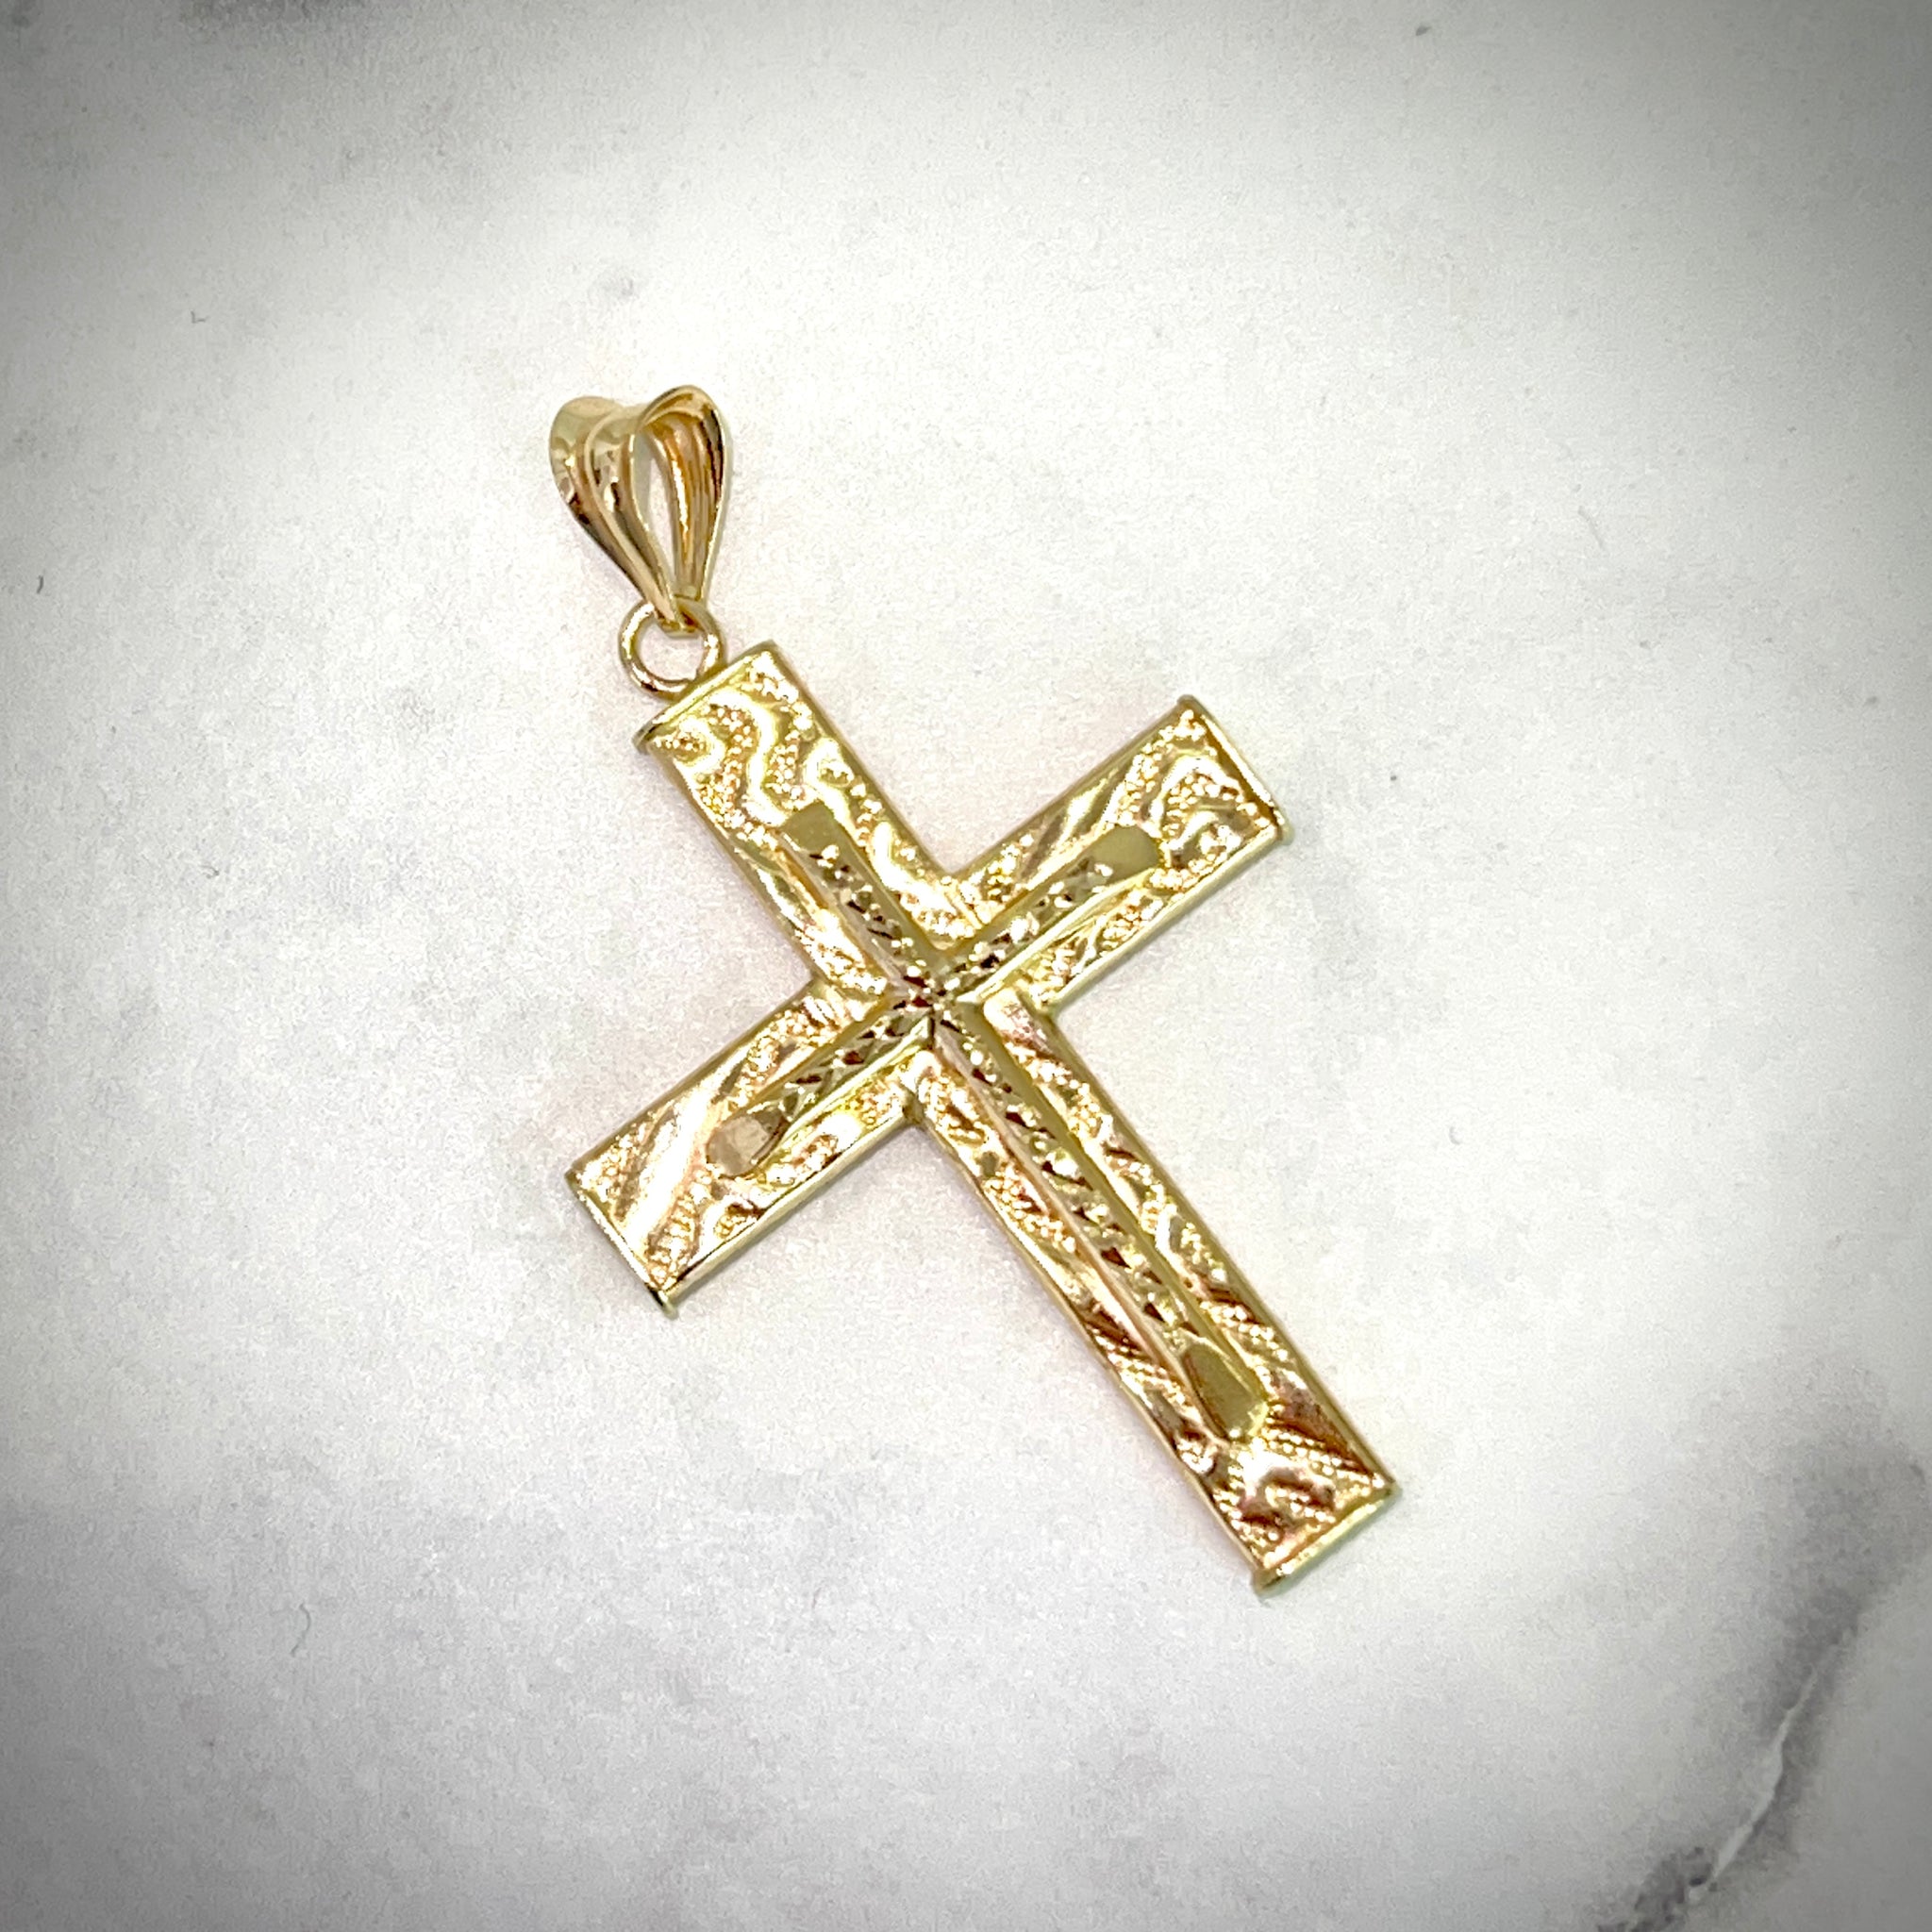 Cross Pendant Diamond Cut - 18 carat gold